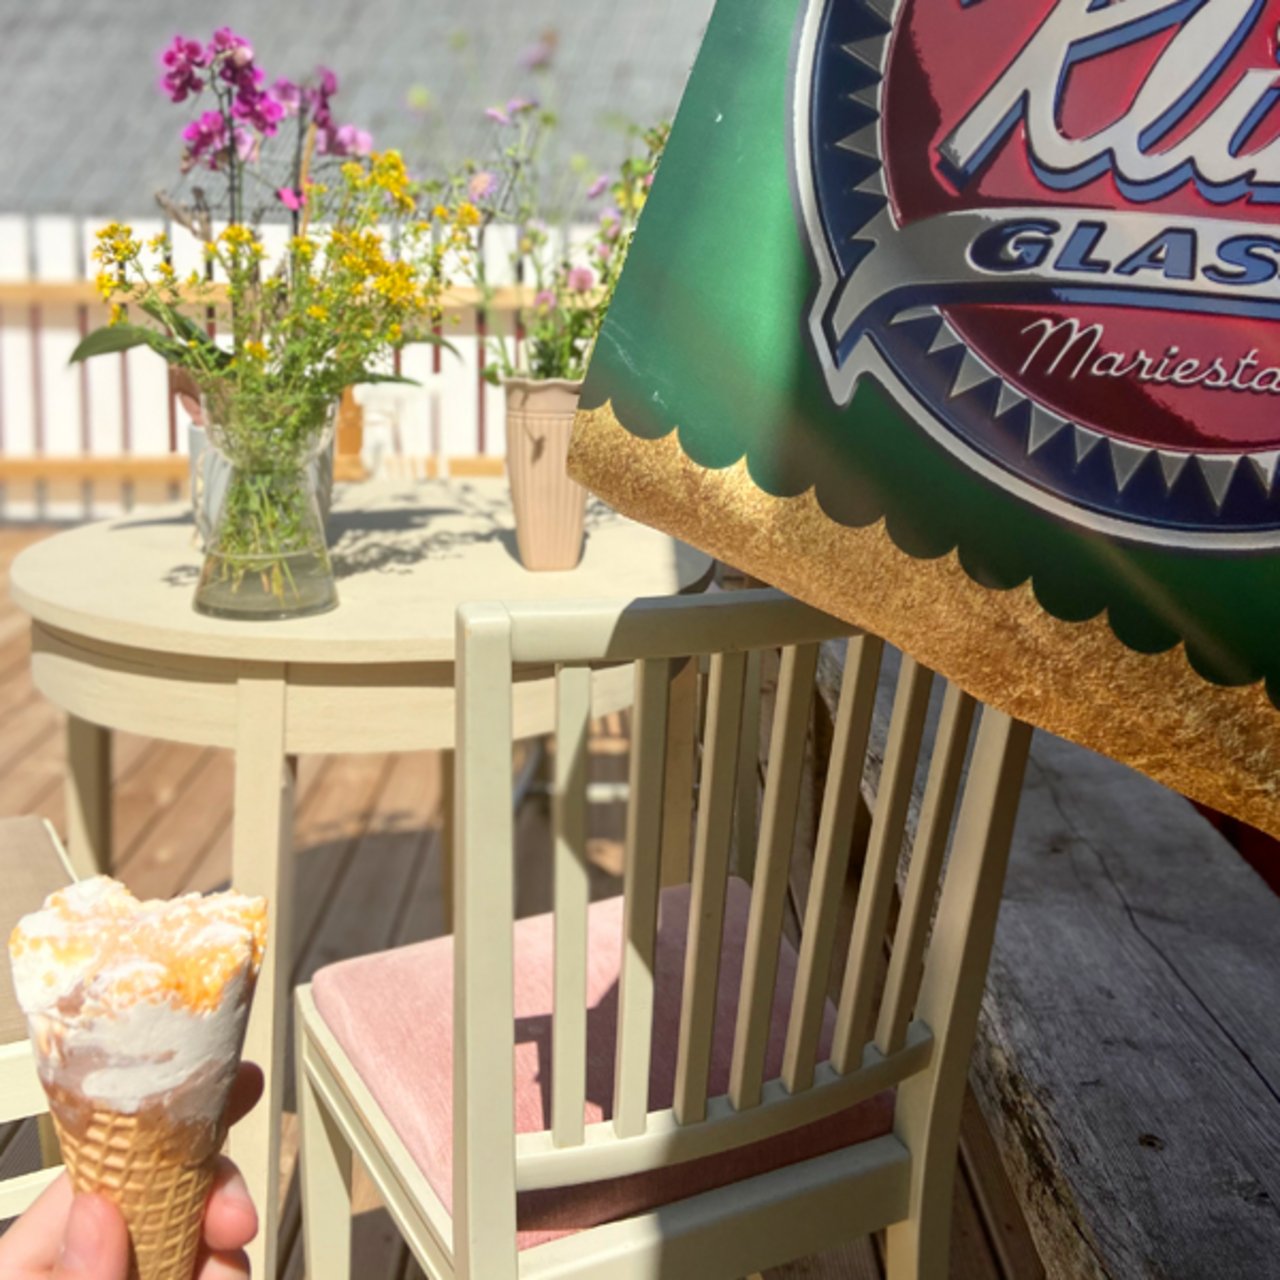 italian ice-cream in Småland